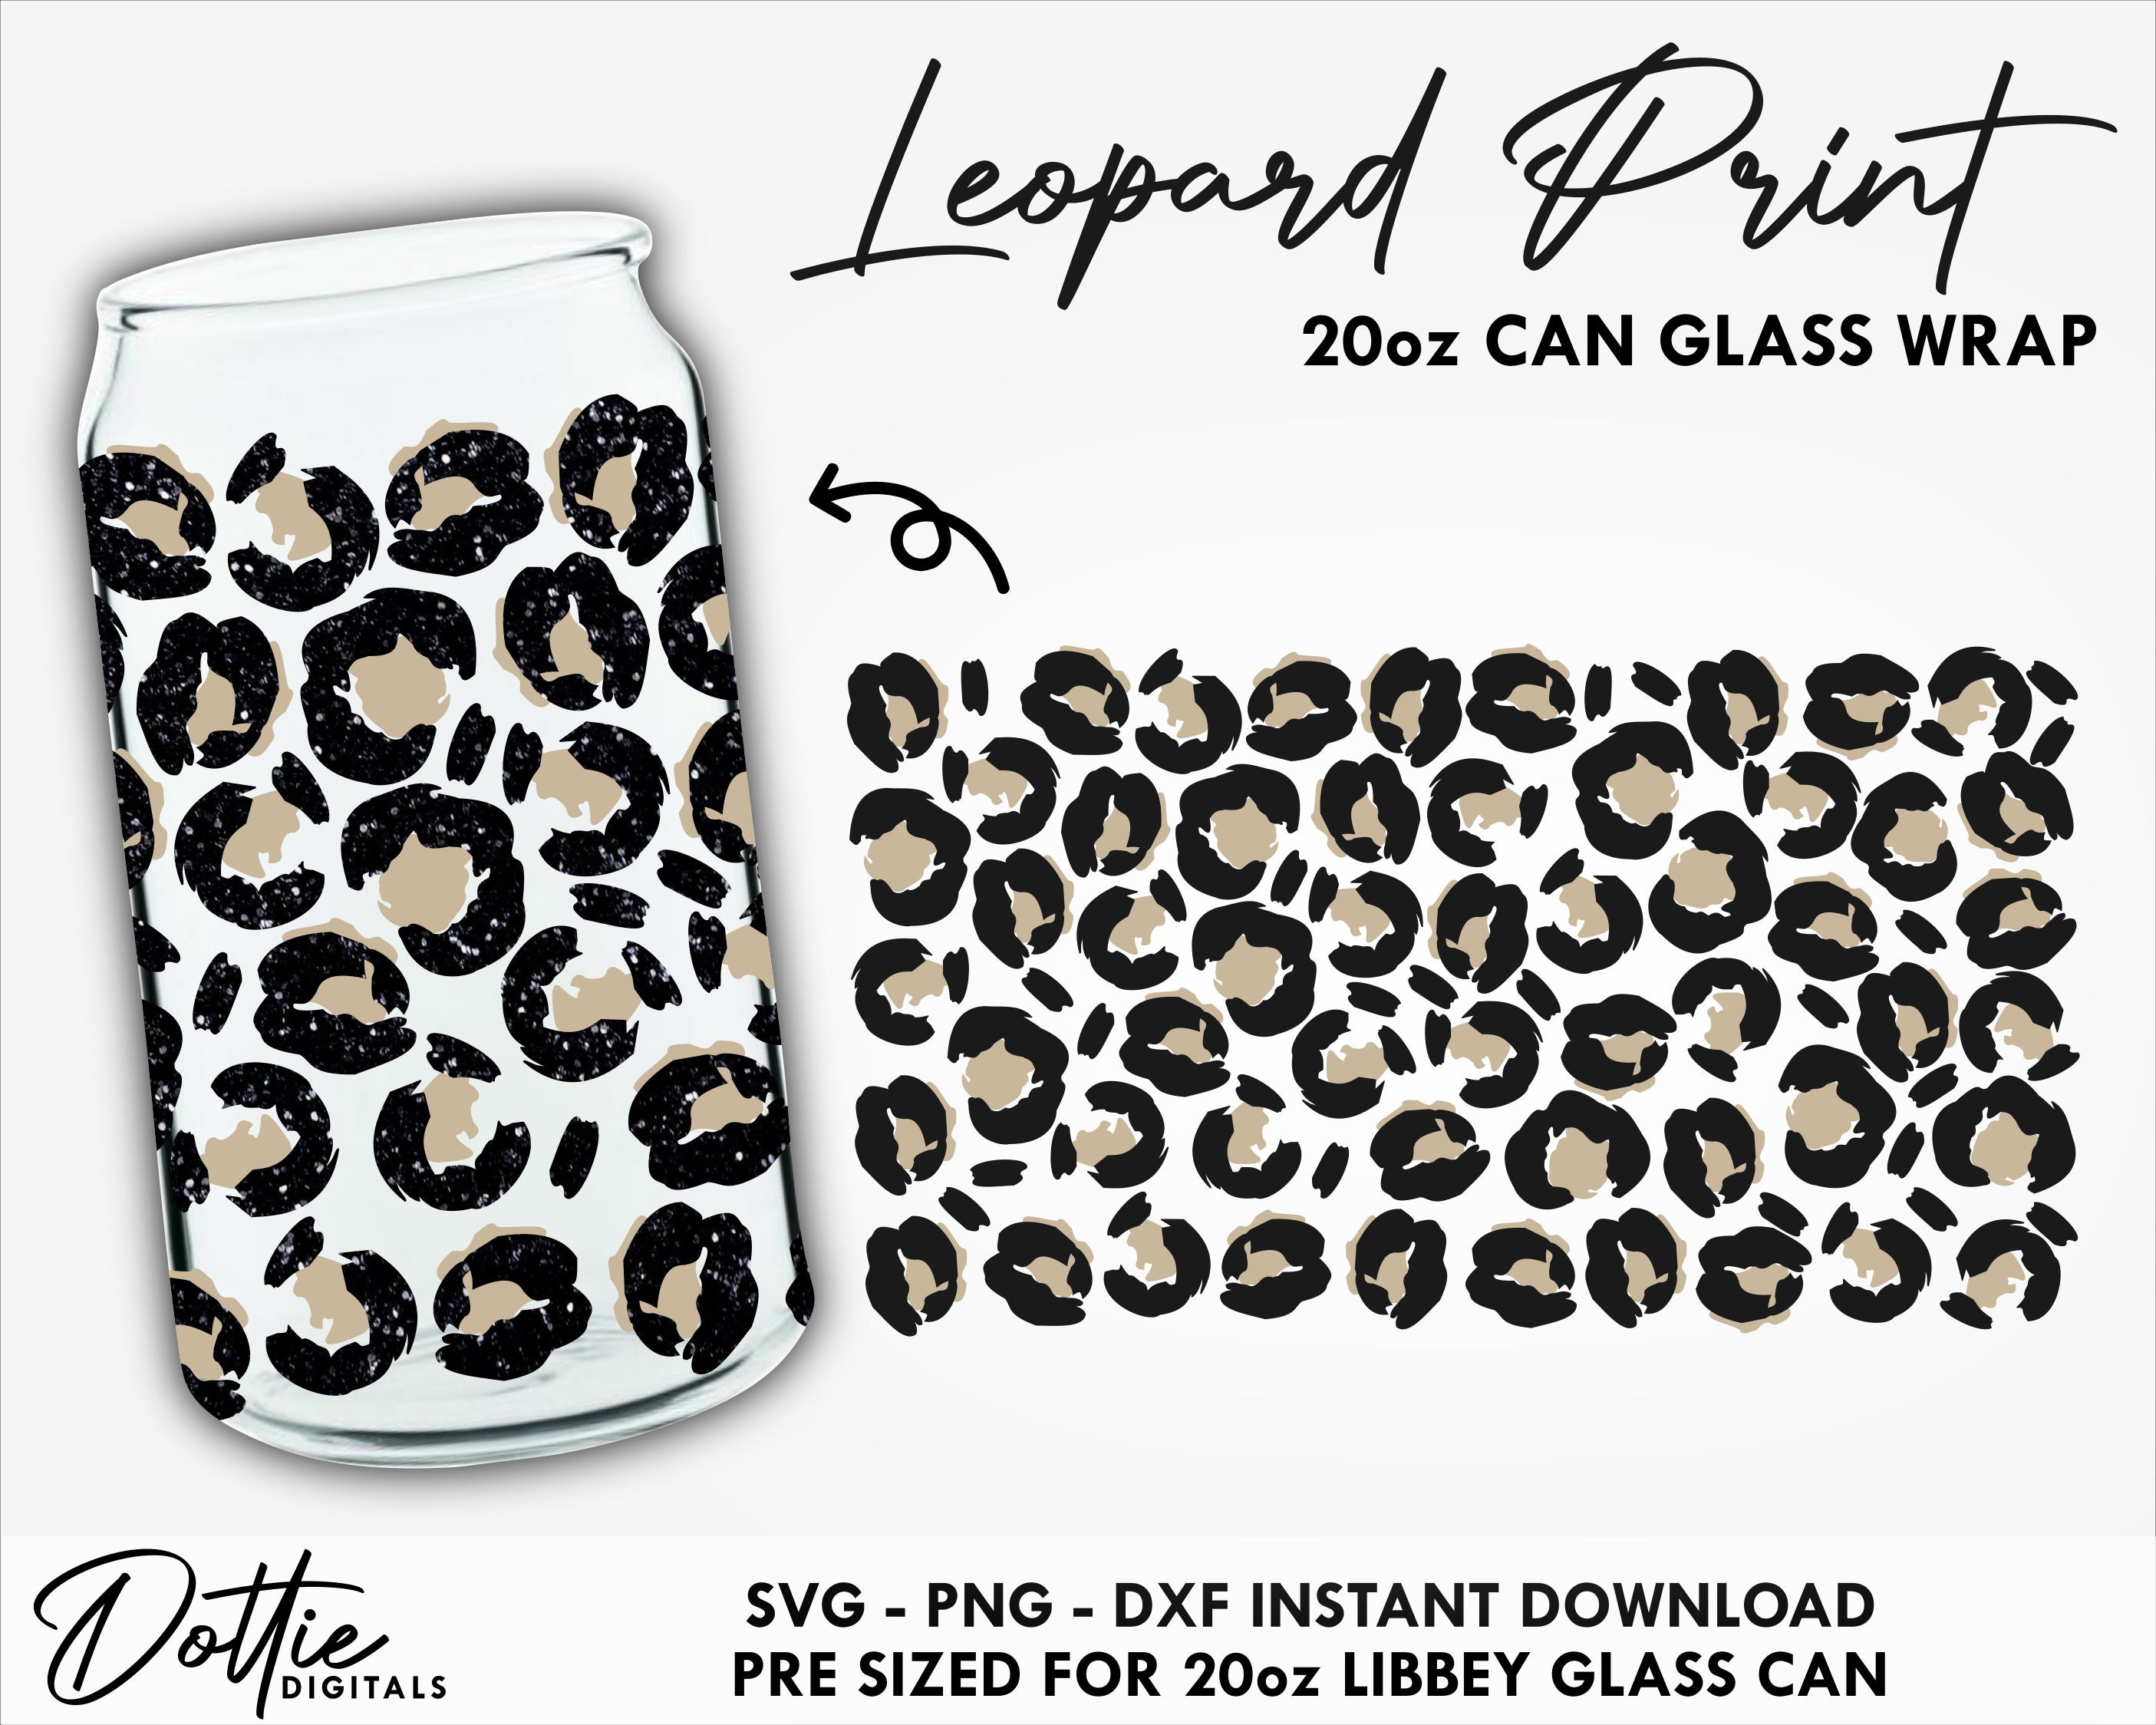 Dottie Digitals - Libbey Glass SVG Peppermints 20oz Libbey Can